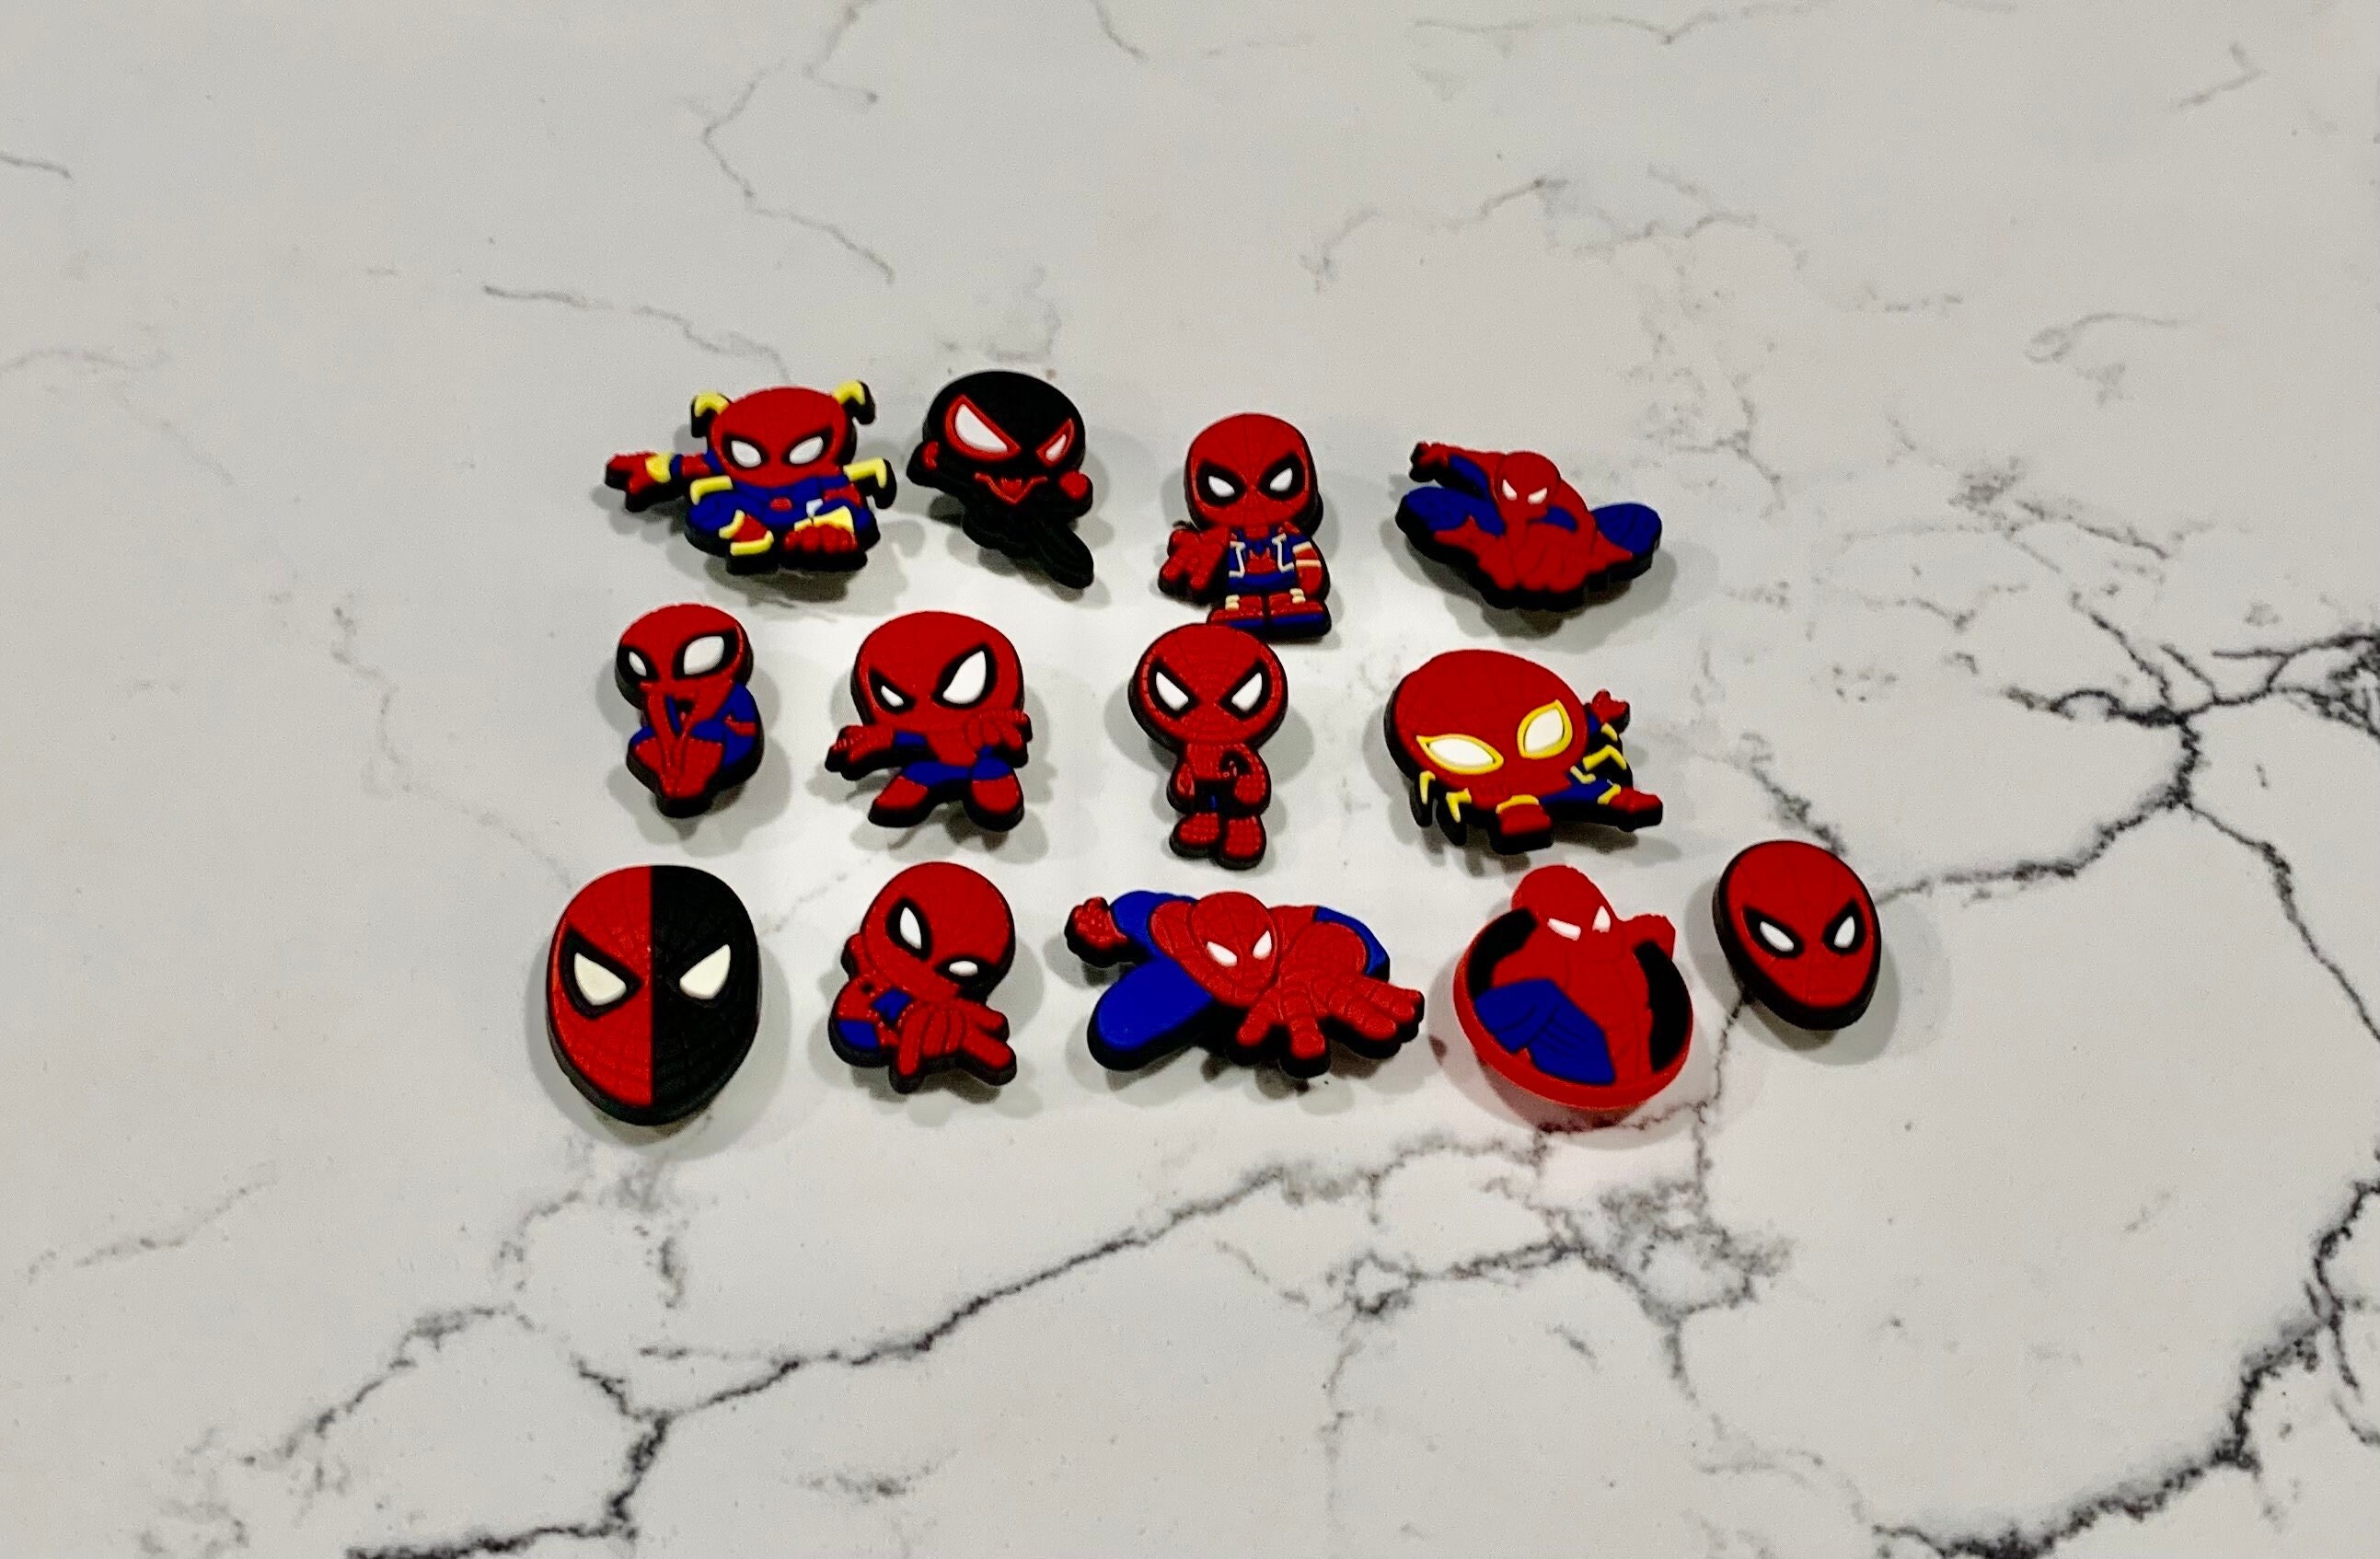 CROCS, Jewelry, Crocs Spiderman Charm 35